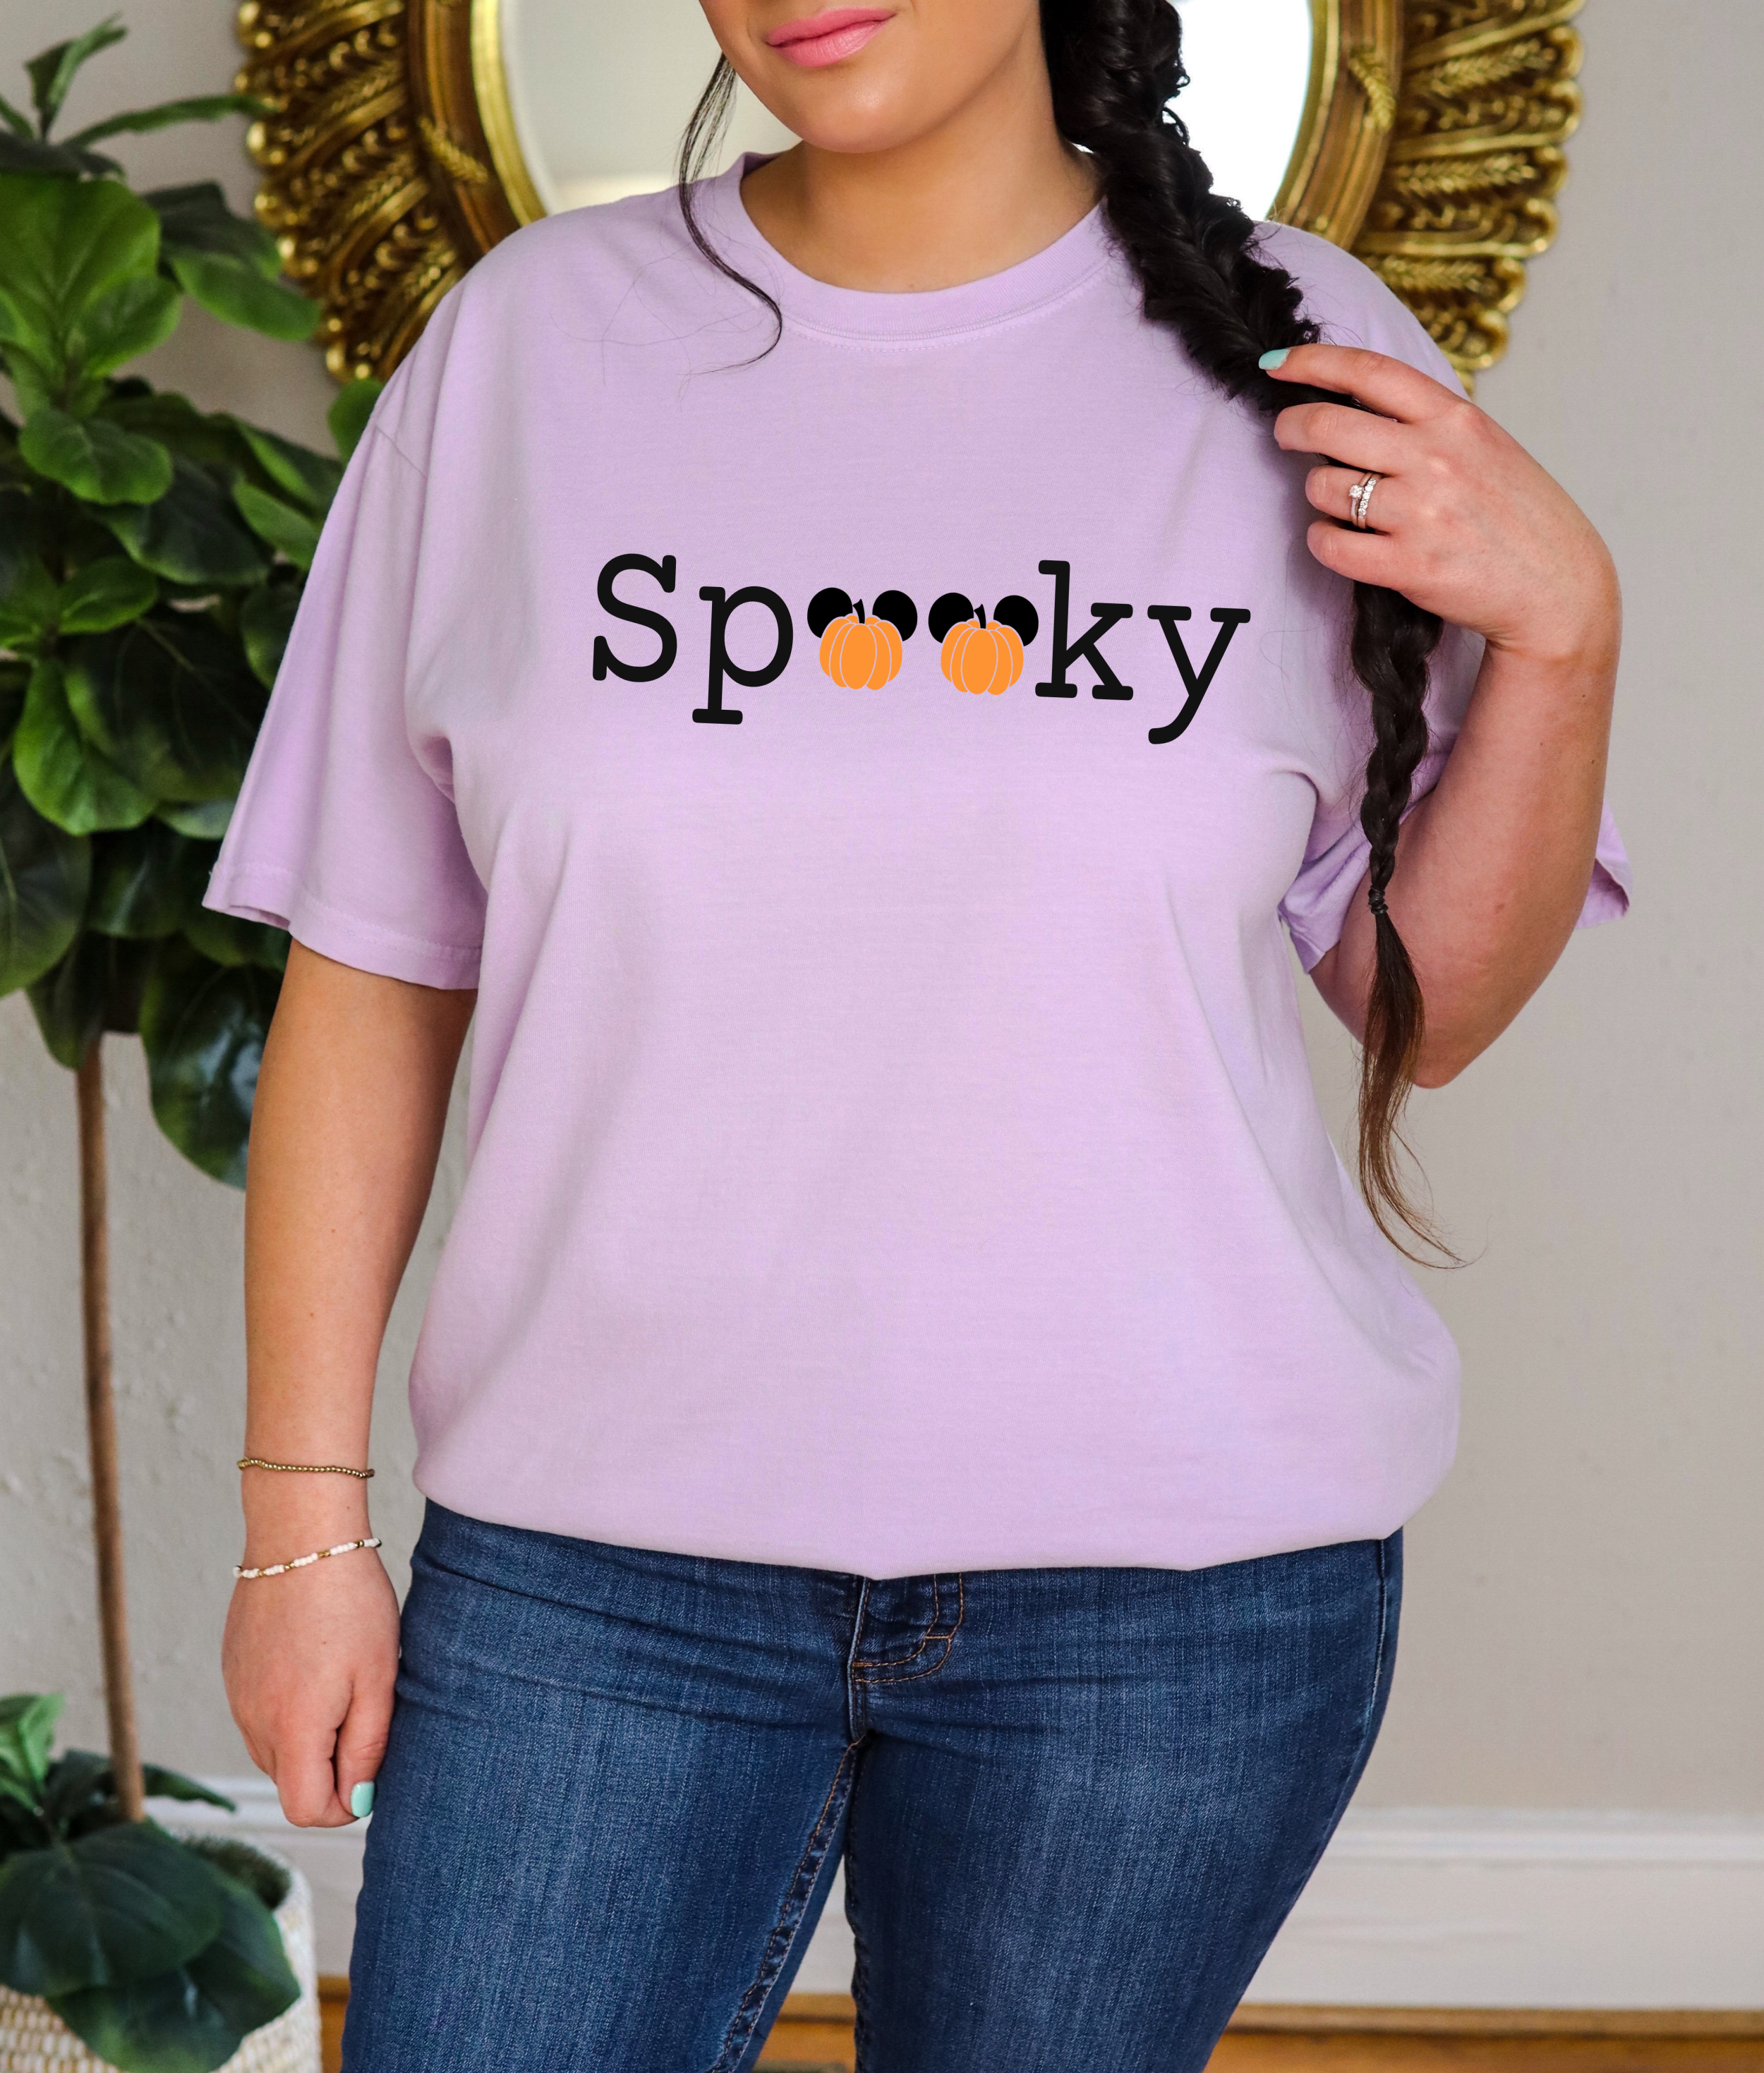 Spooky Mickey Pumpkins Shirt